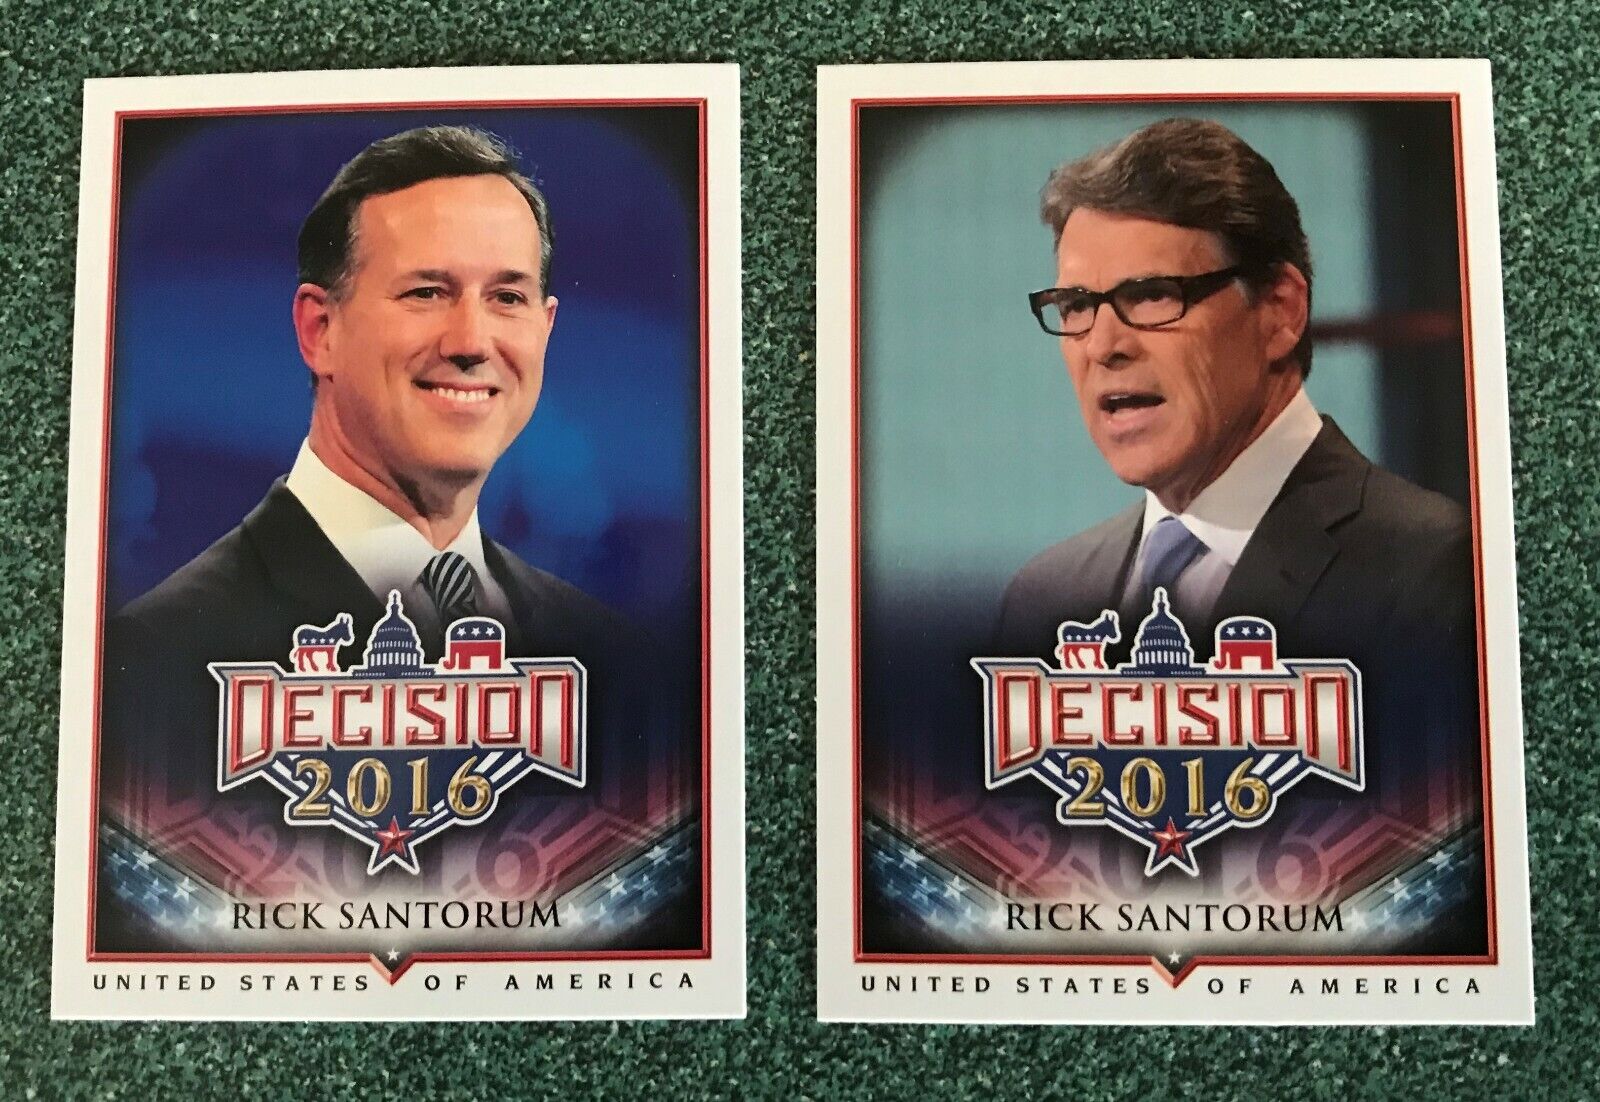  Rick Perry error card Decision 2016 Cards, includes correct Rick Santorum card